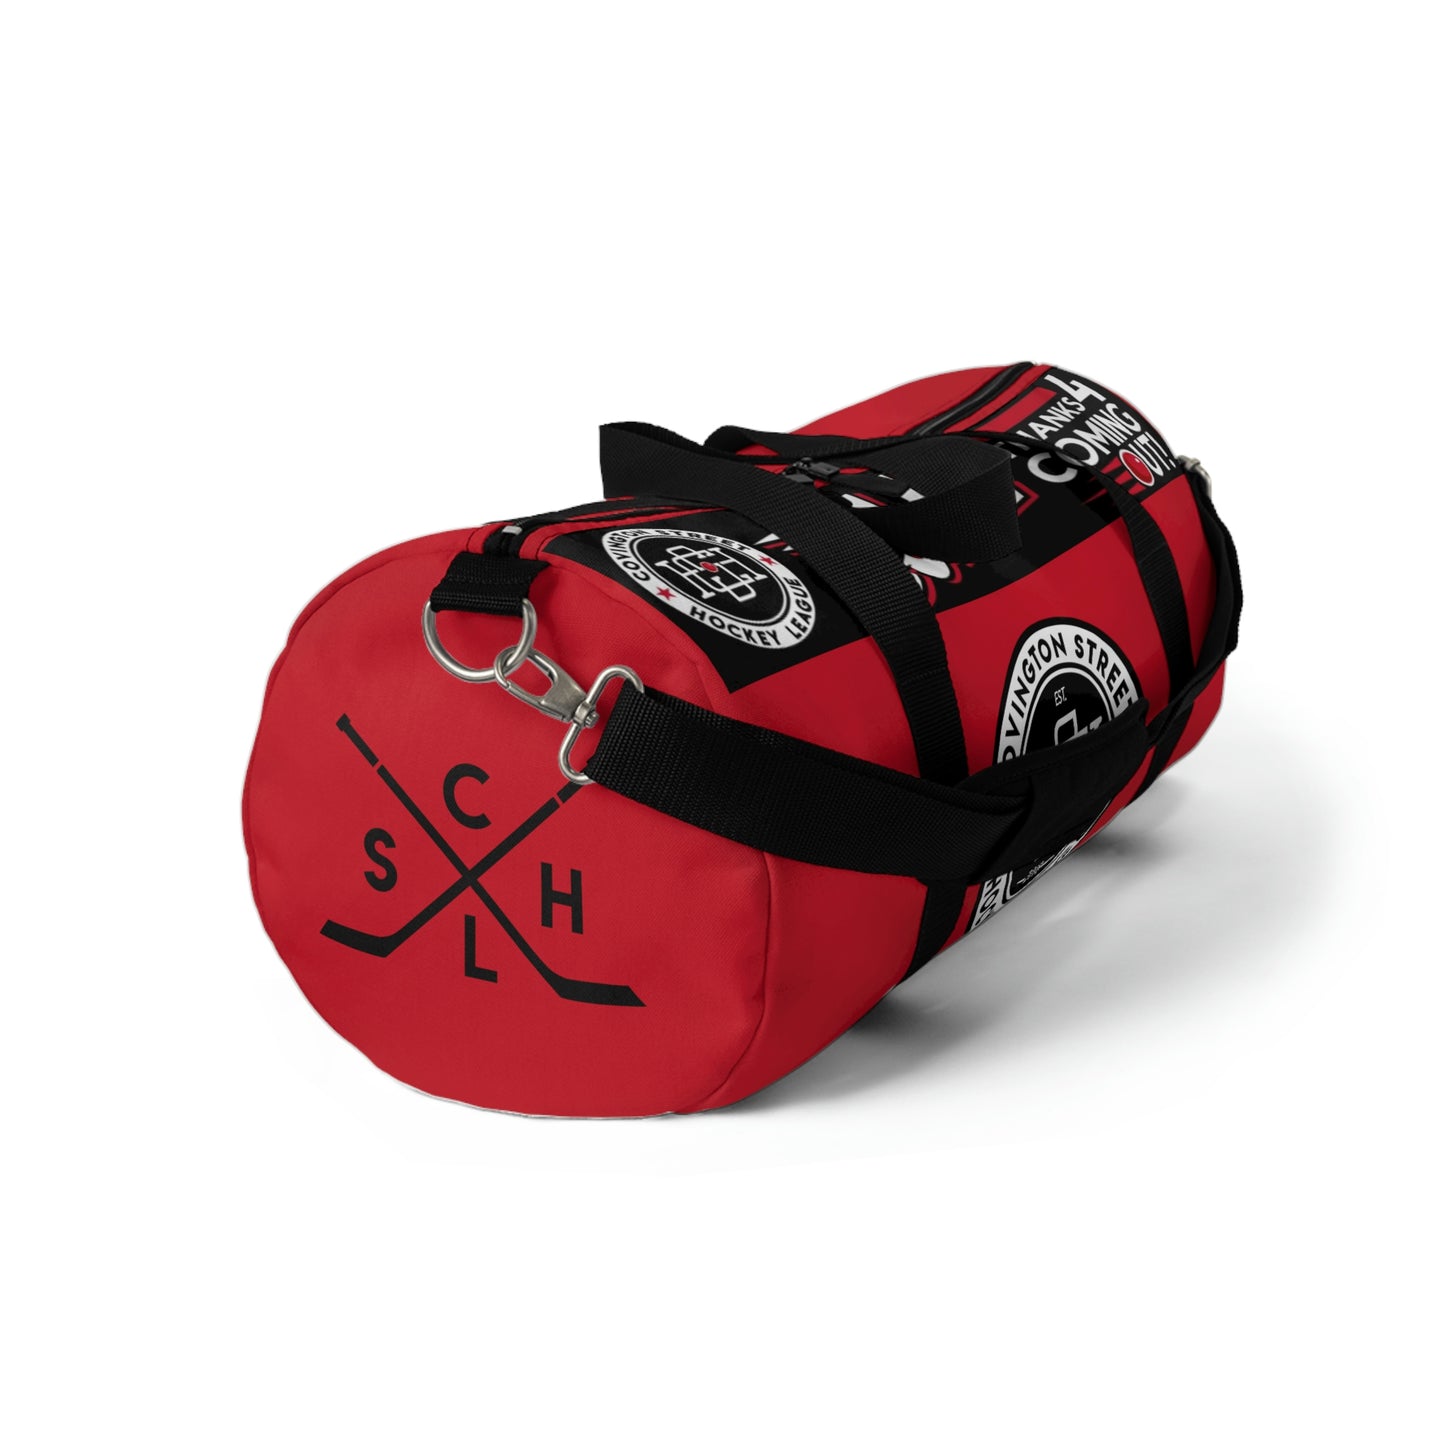 The CSHL Red "Send It!" Hockey Bag